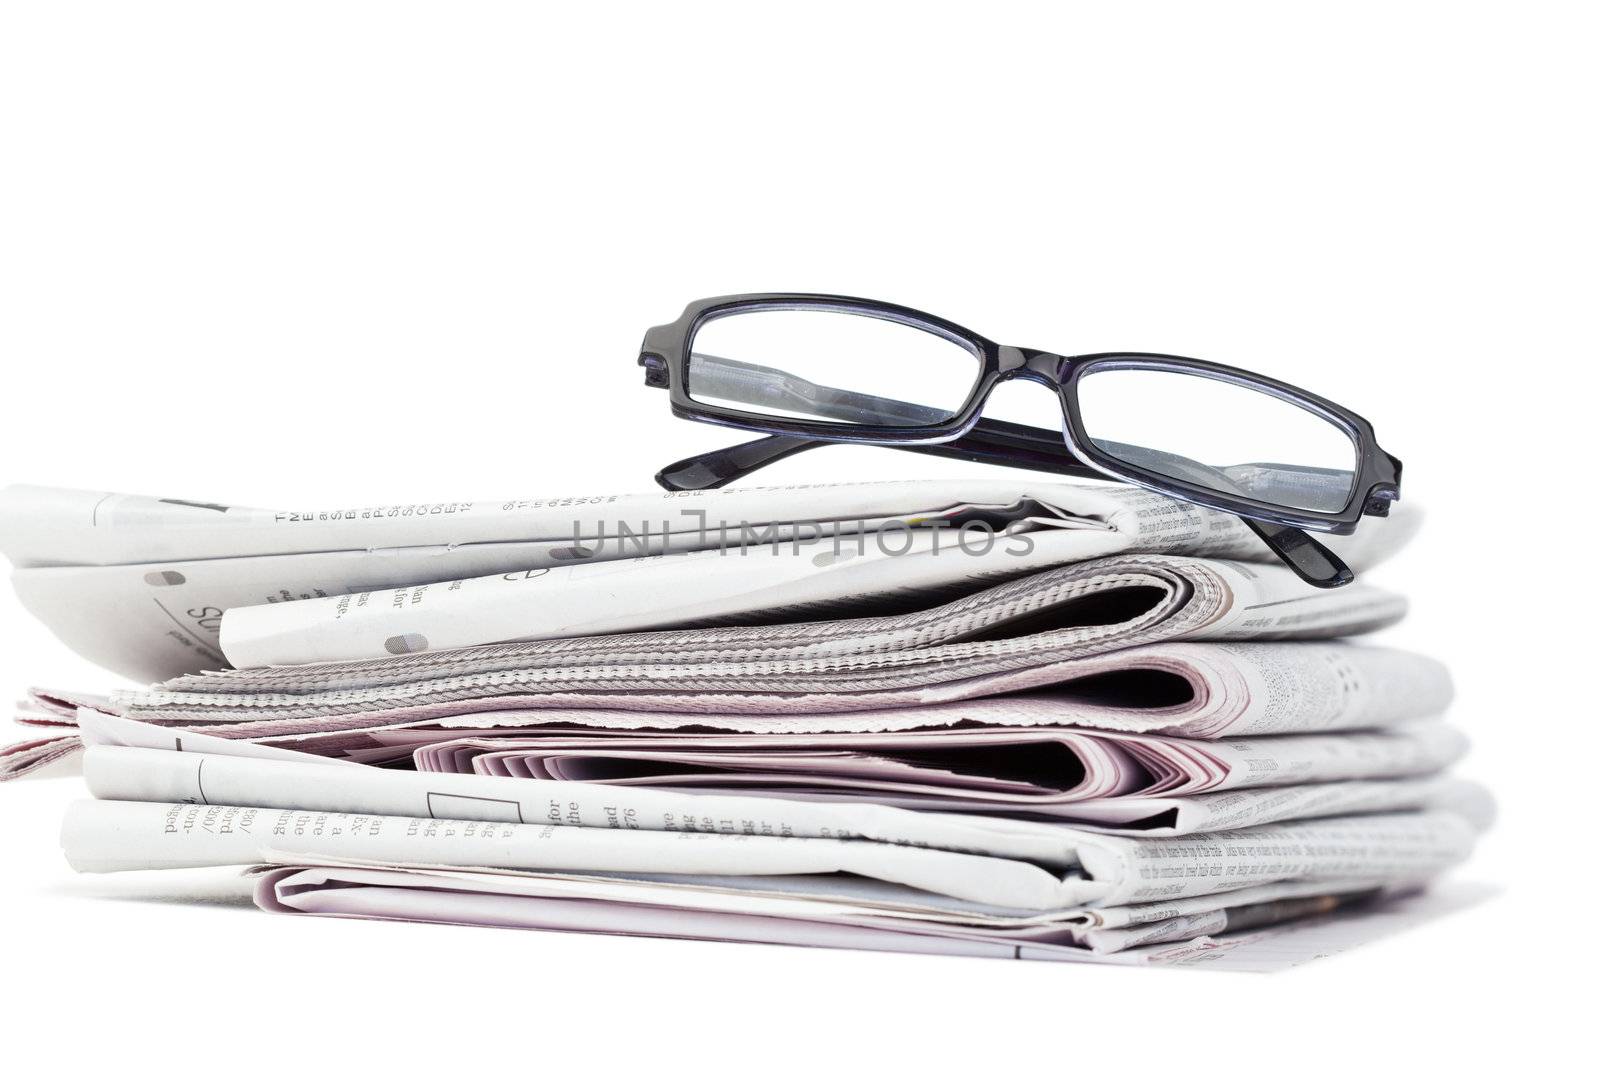 Newspapers and black glasses by Wavebreakmedia